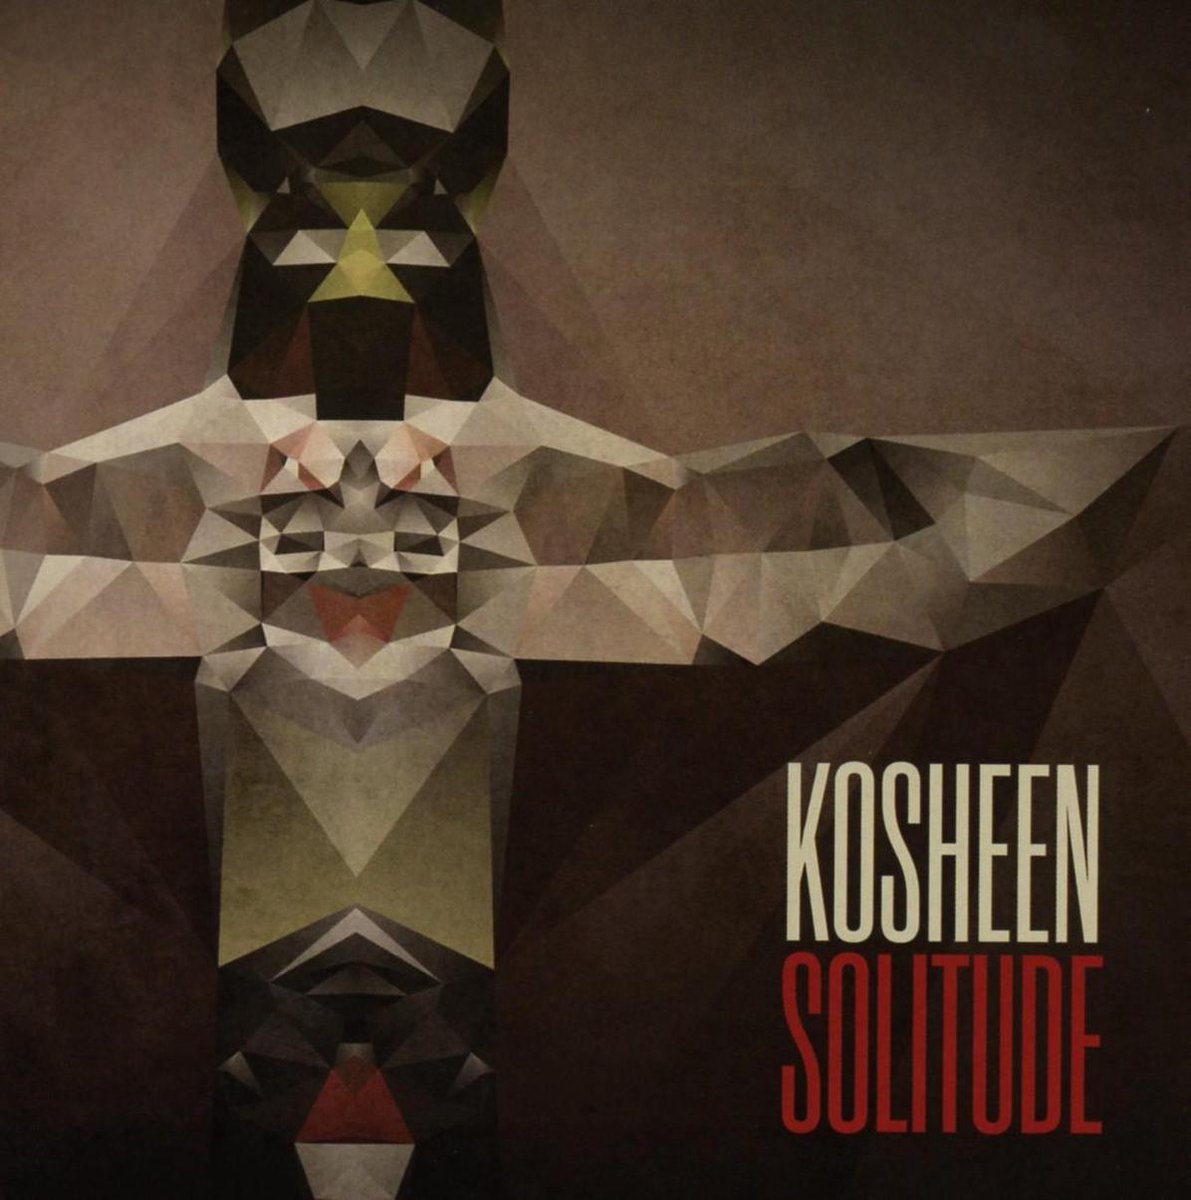 Solitude - Kosheen